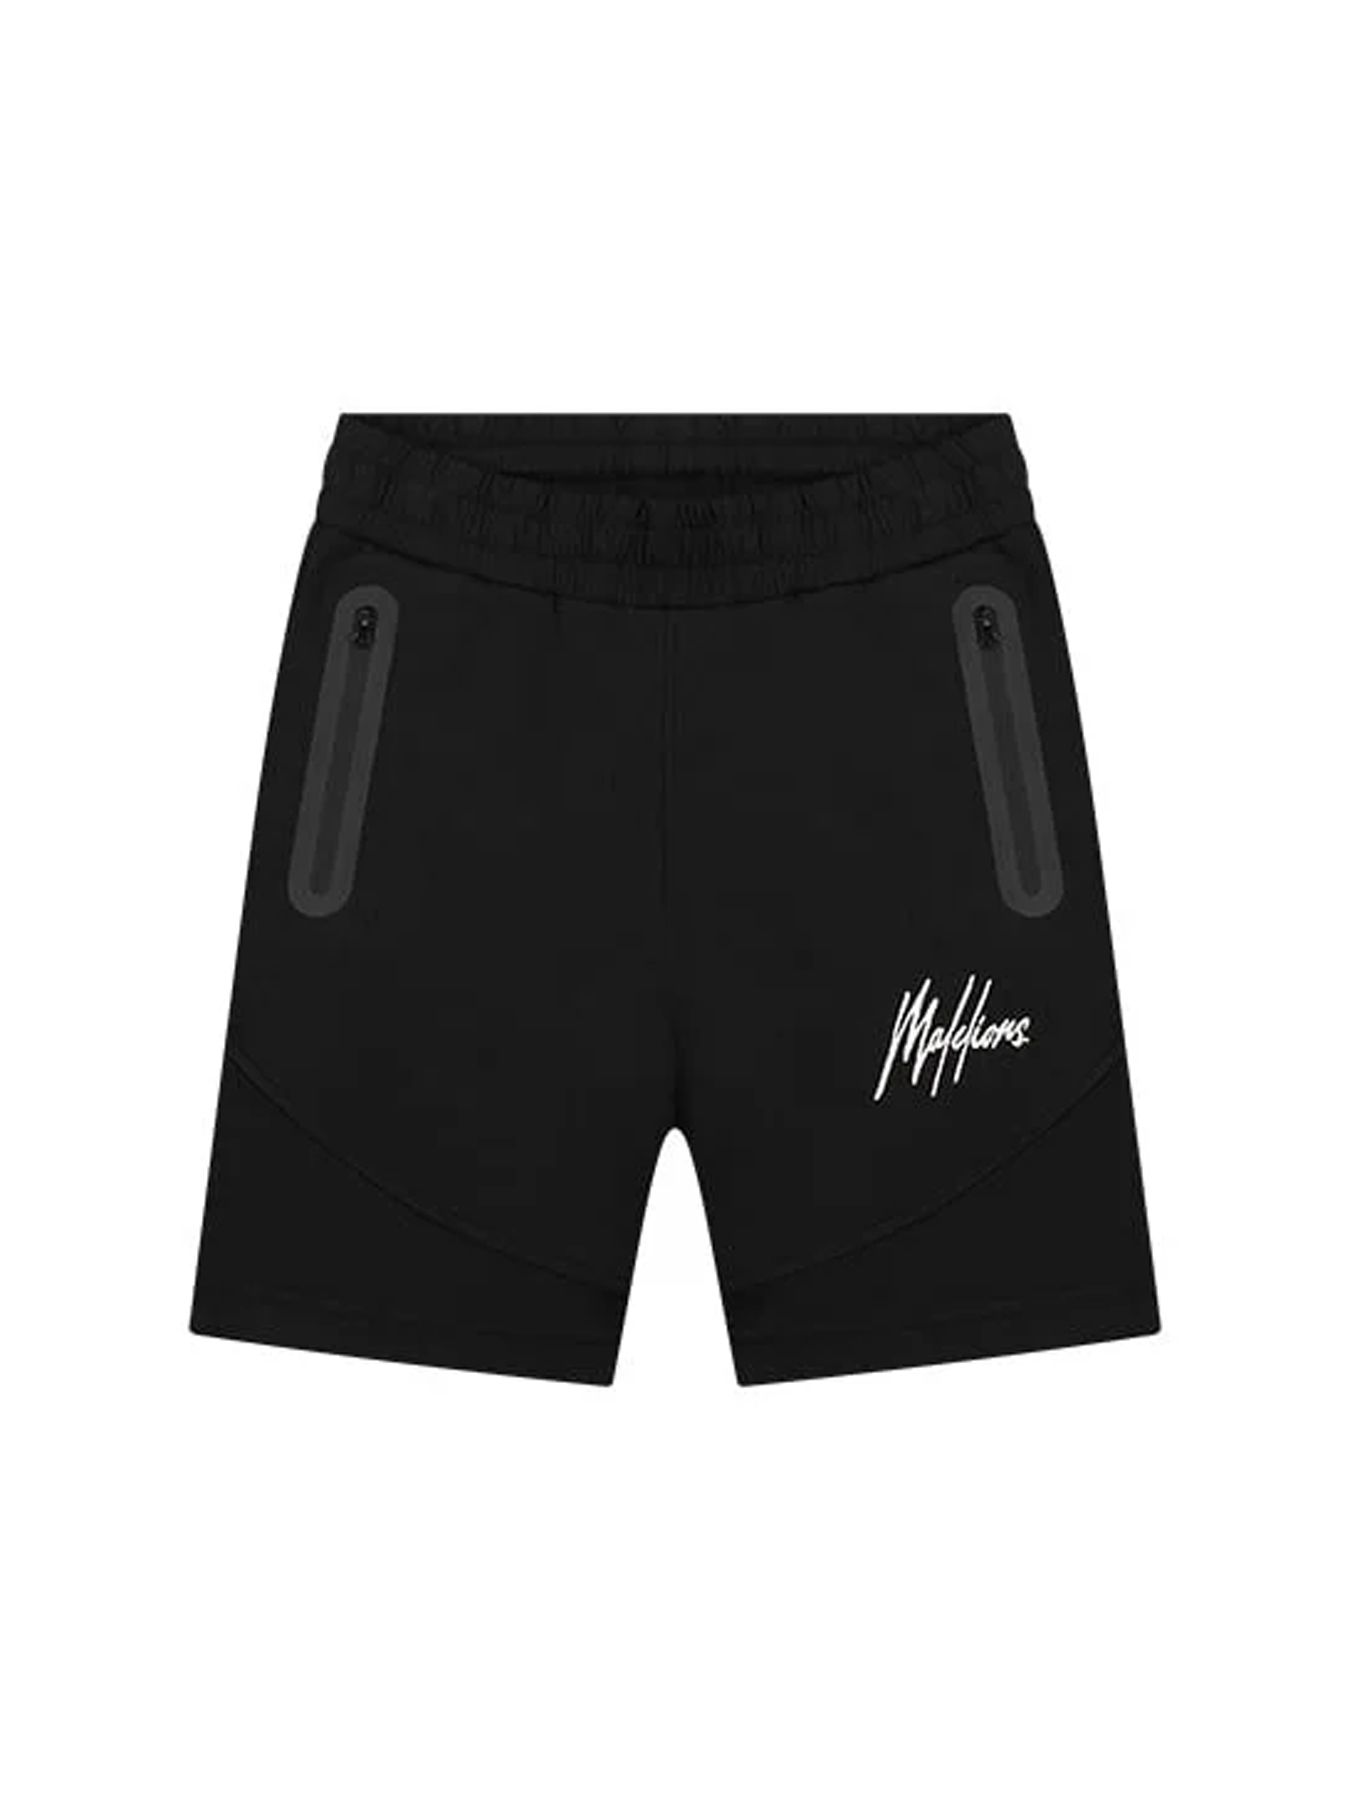 Malelions Junior sport counter shorts Black 2900146462053